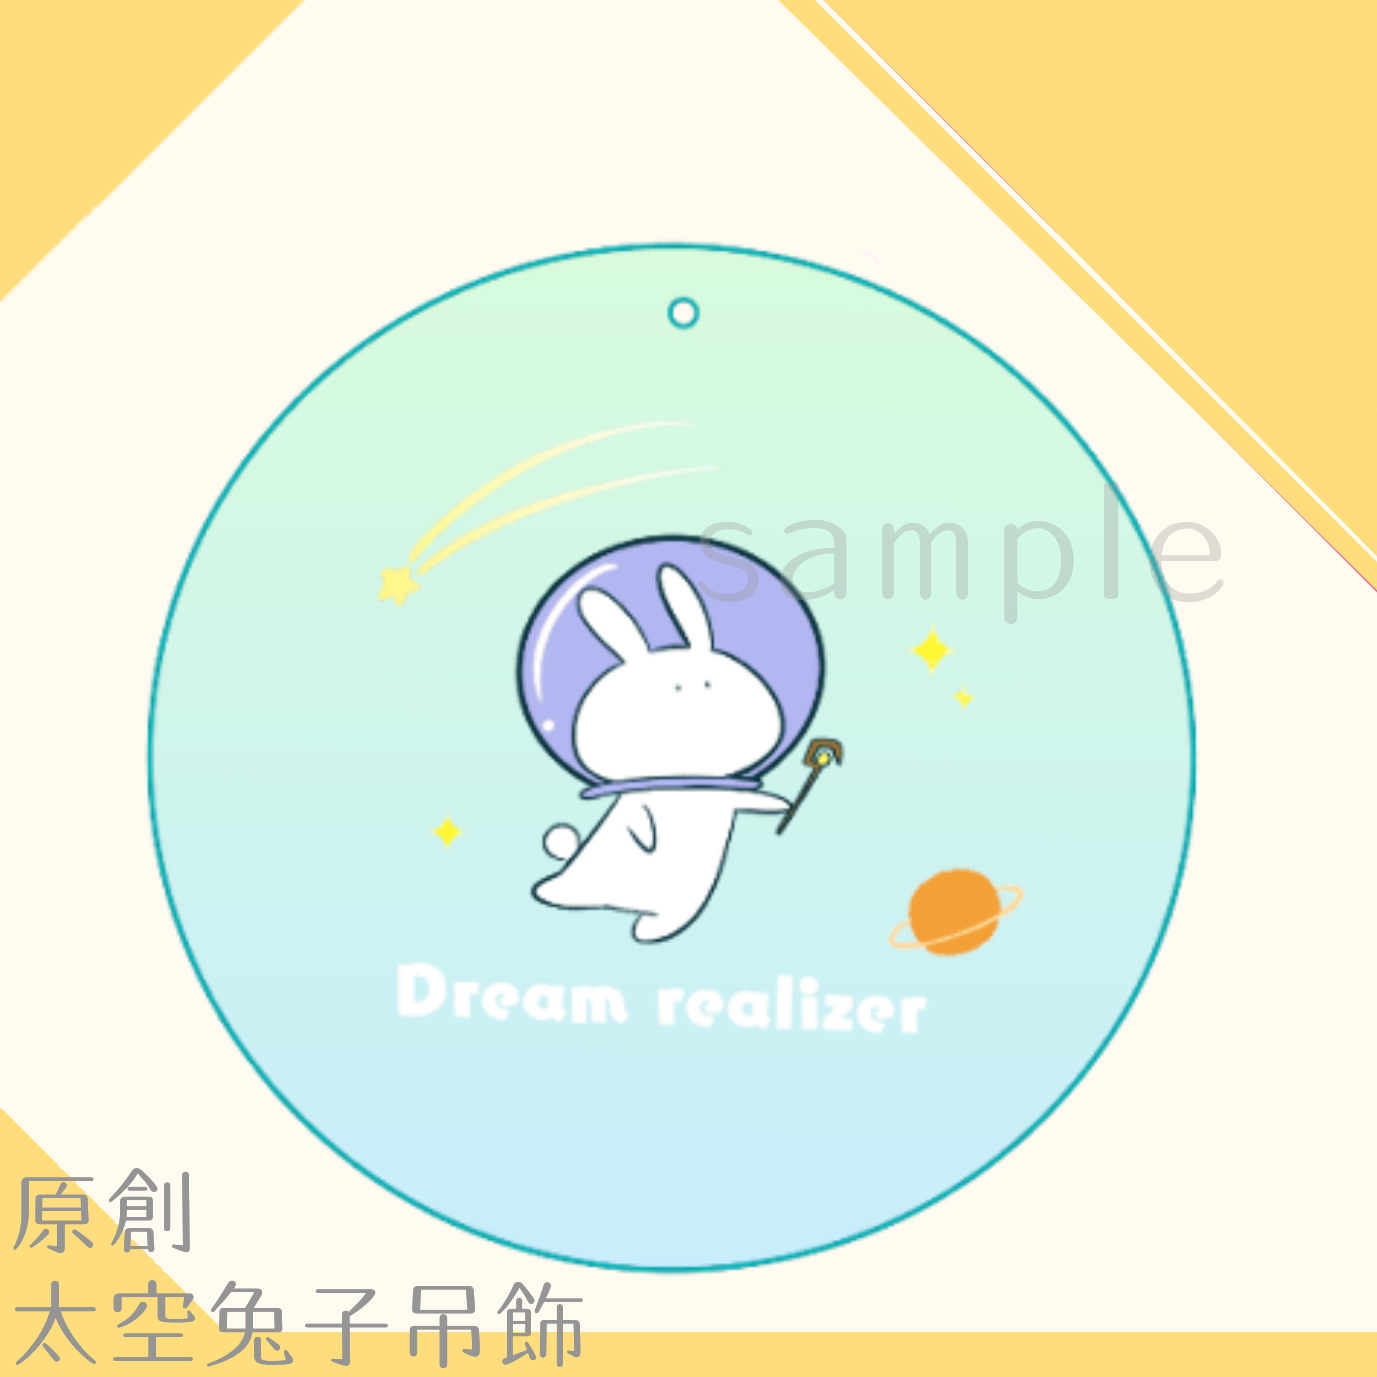 【原創】Dream realizer彩虹膜吊飾